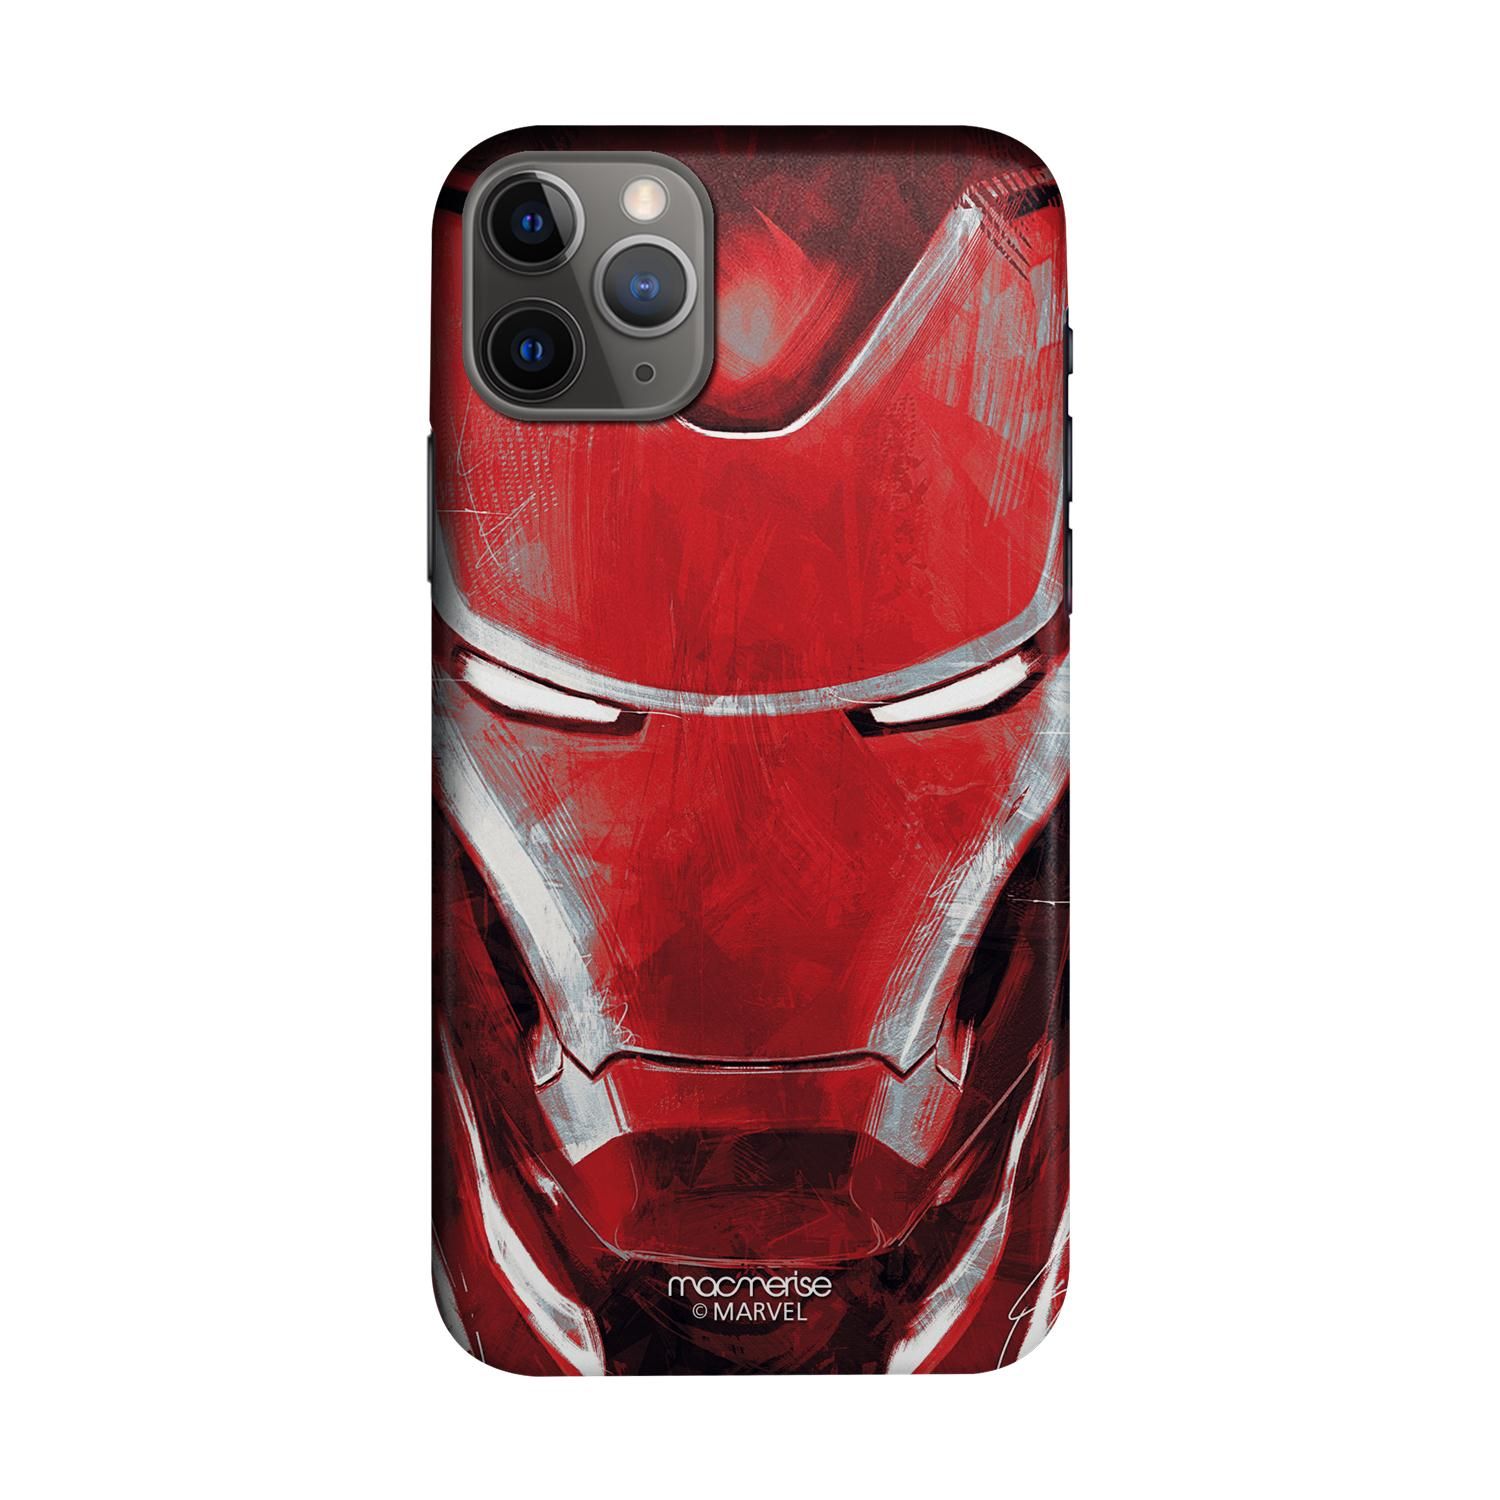 Charcoal Art Iron man - Sleek Phone Case for iPhone 11 Pro Max